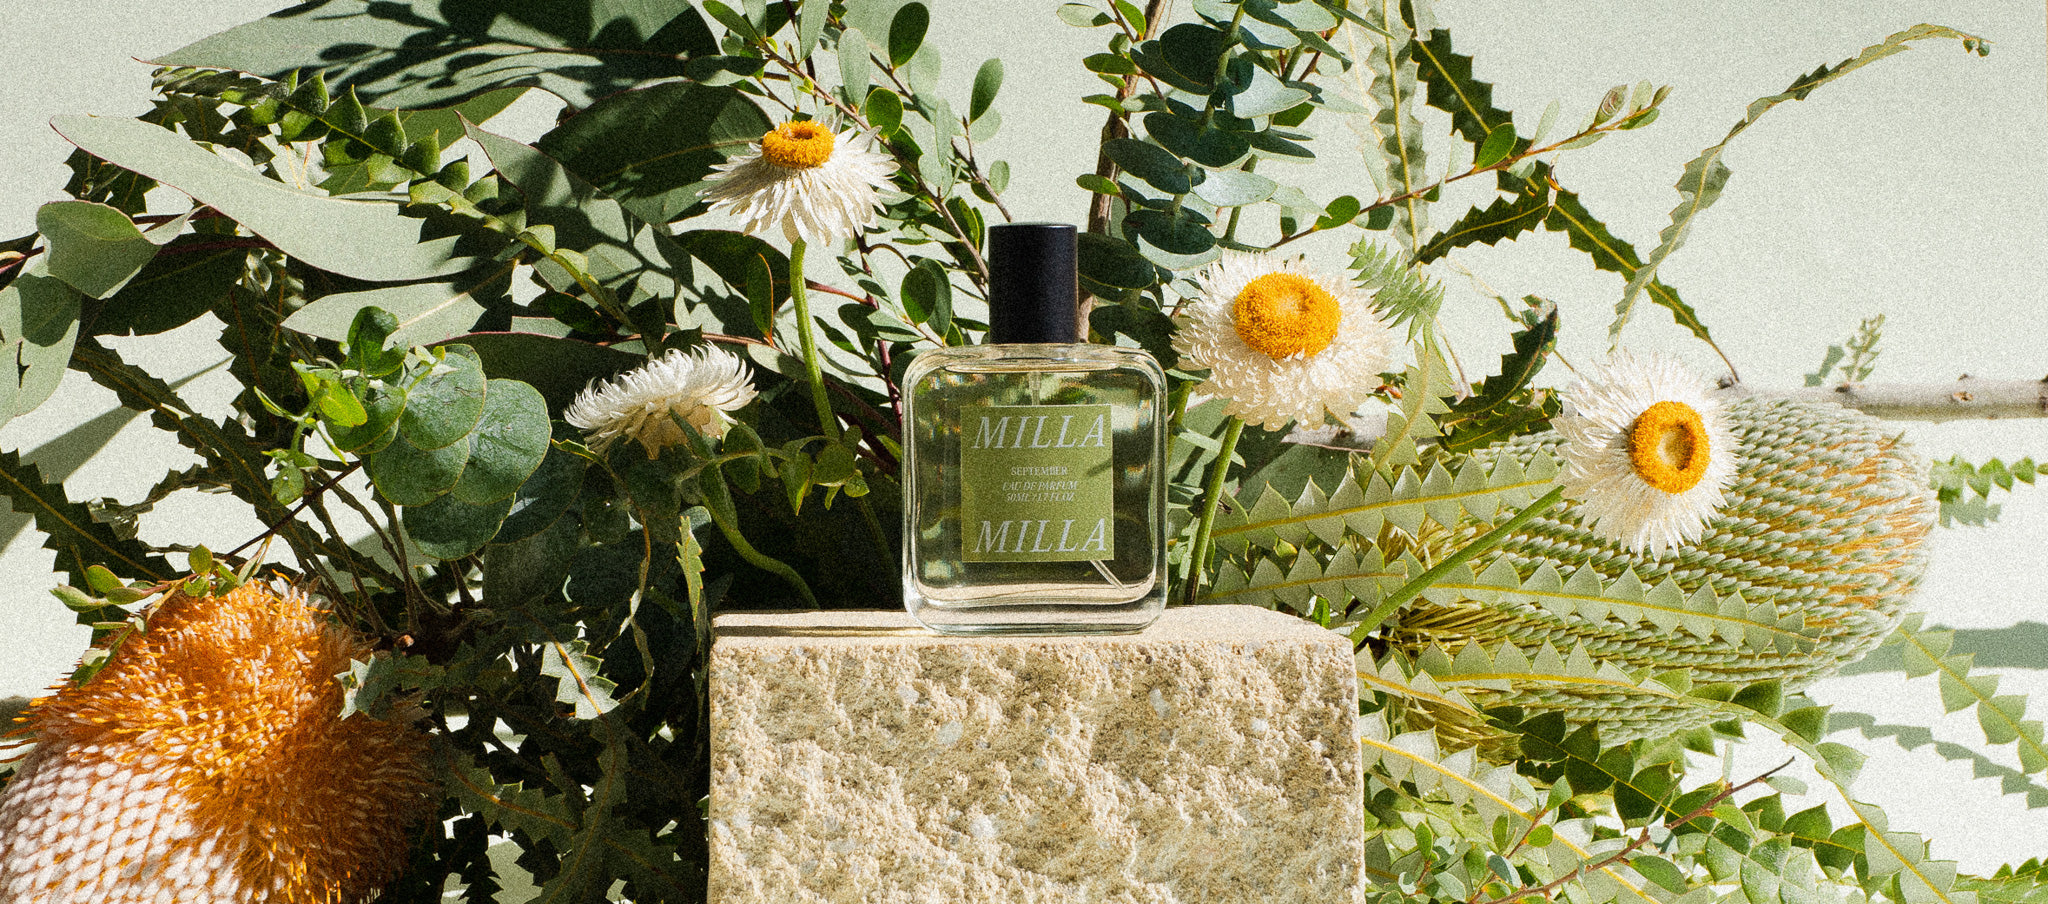 Milla Milla perfume bottle with native Australian flowers behind